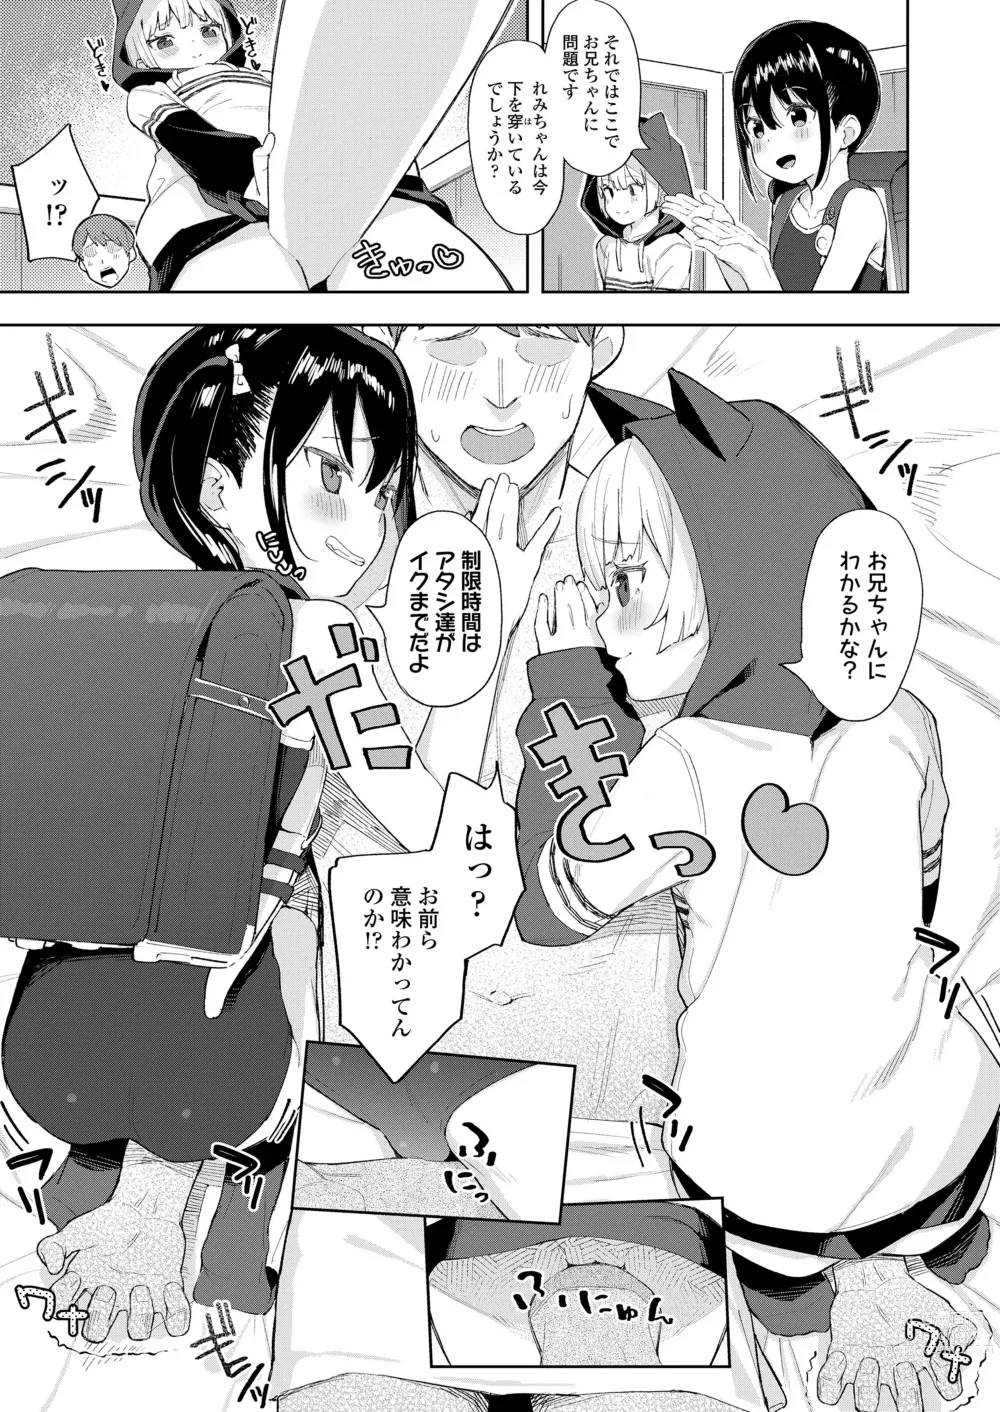 Page 9 of manga Koakuma-tachi ga Yattekita!